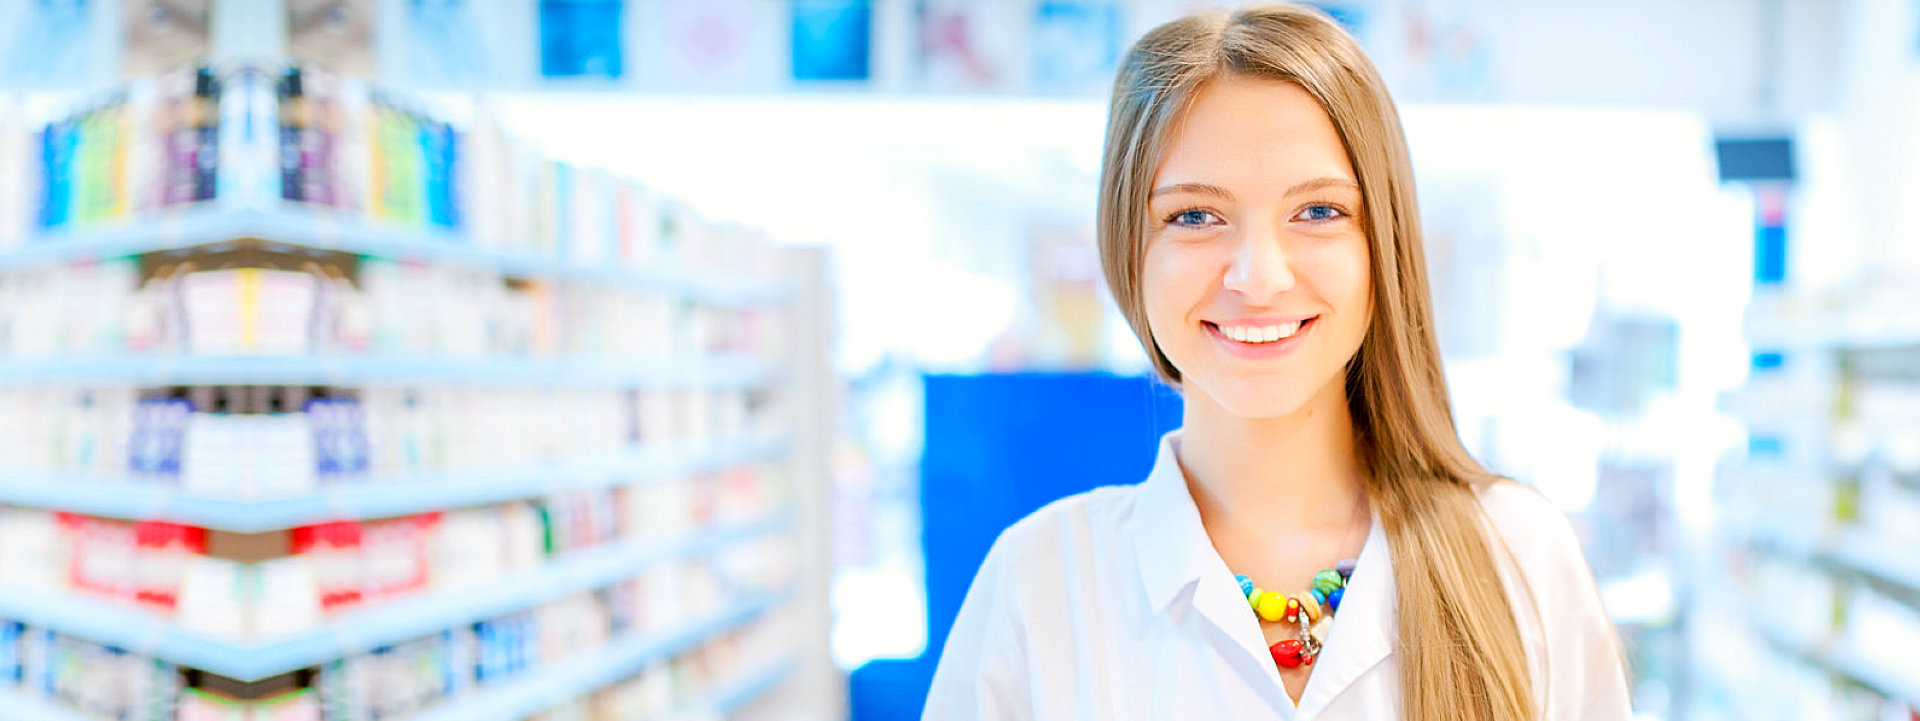 Female pharmacist